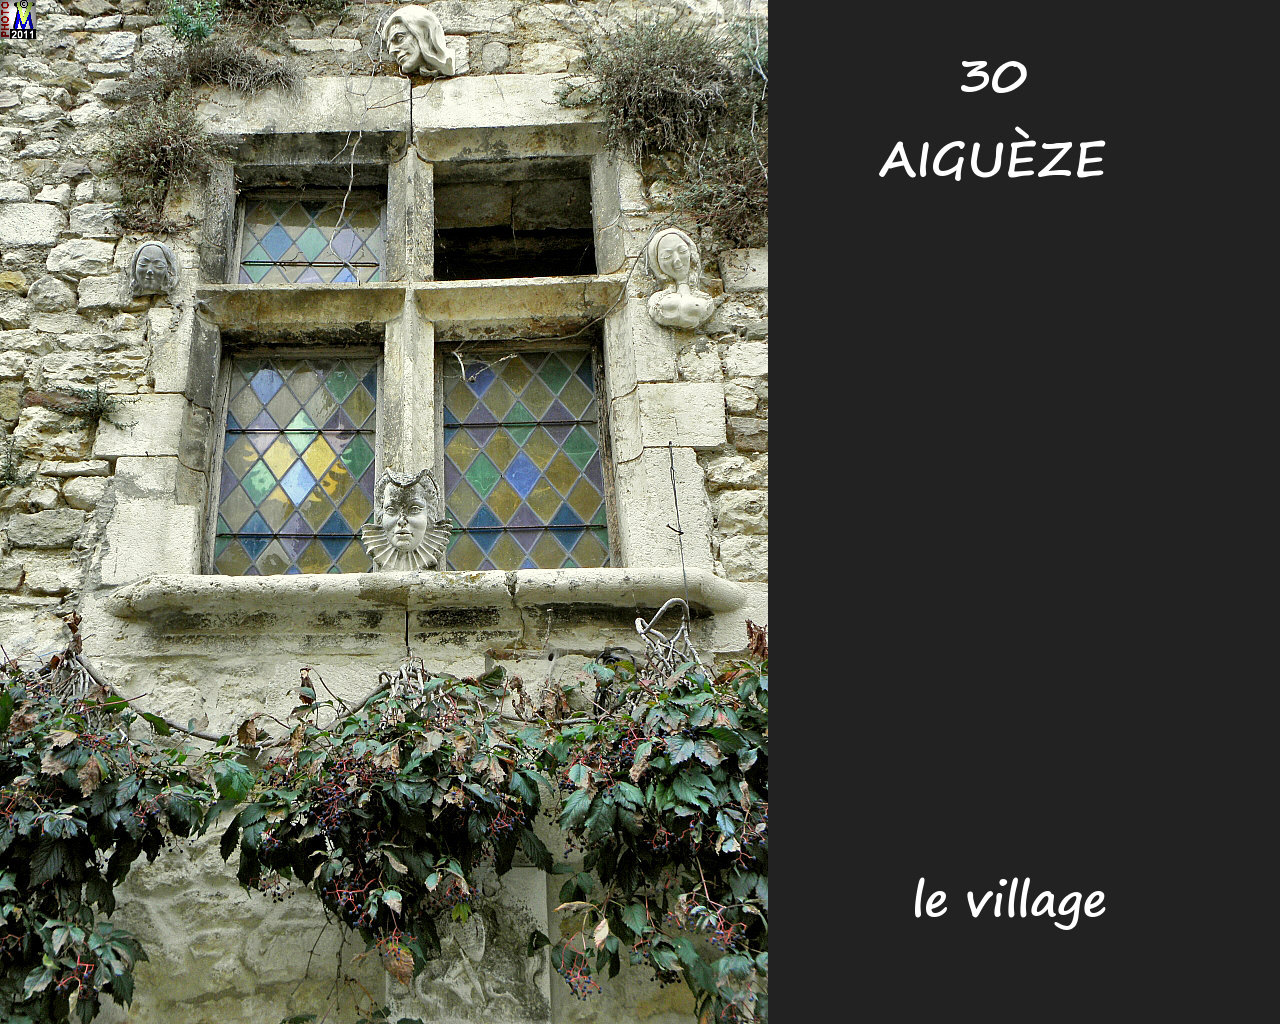 30AIGUEZE_village_146.jpg